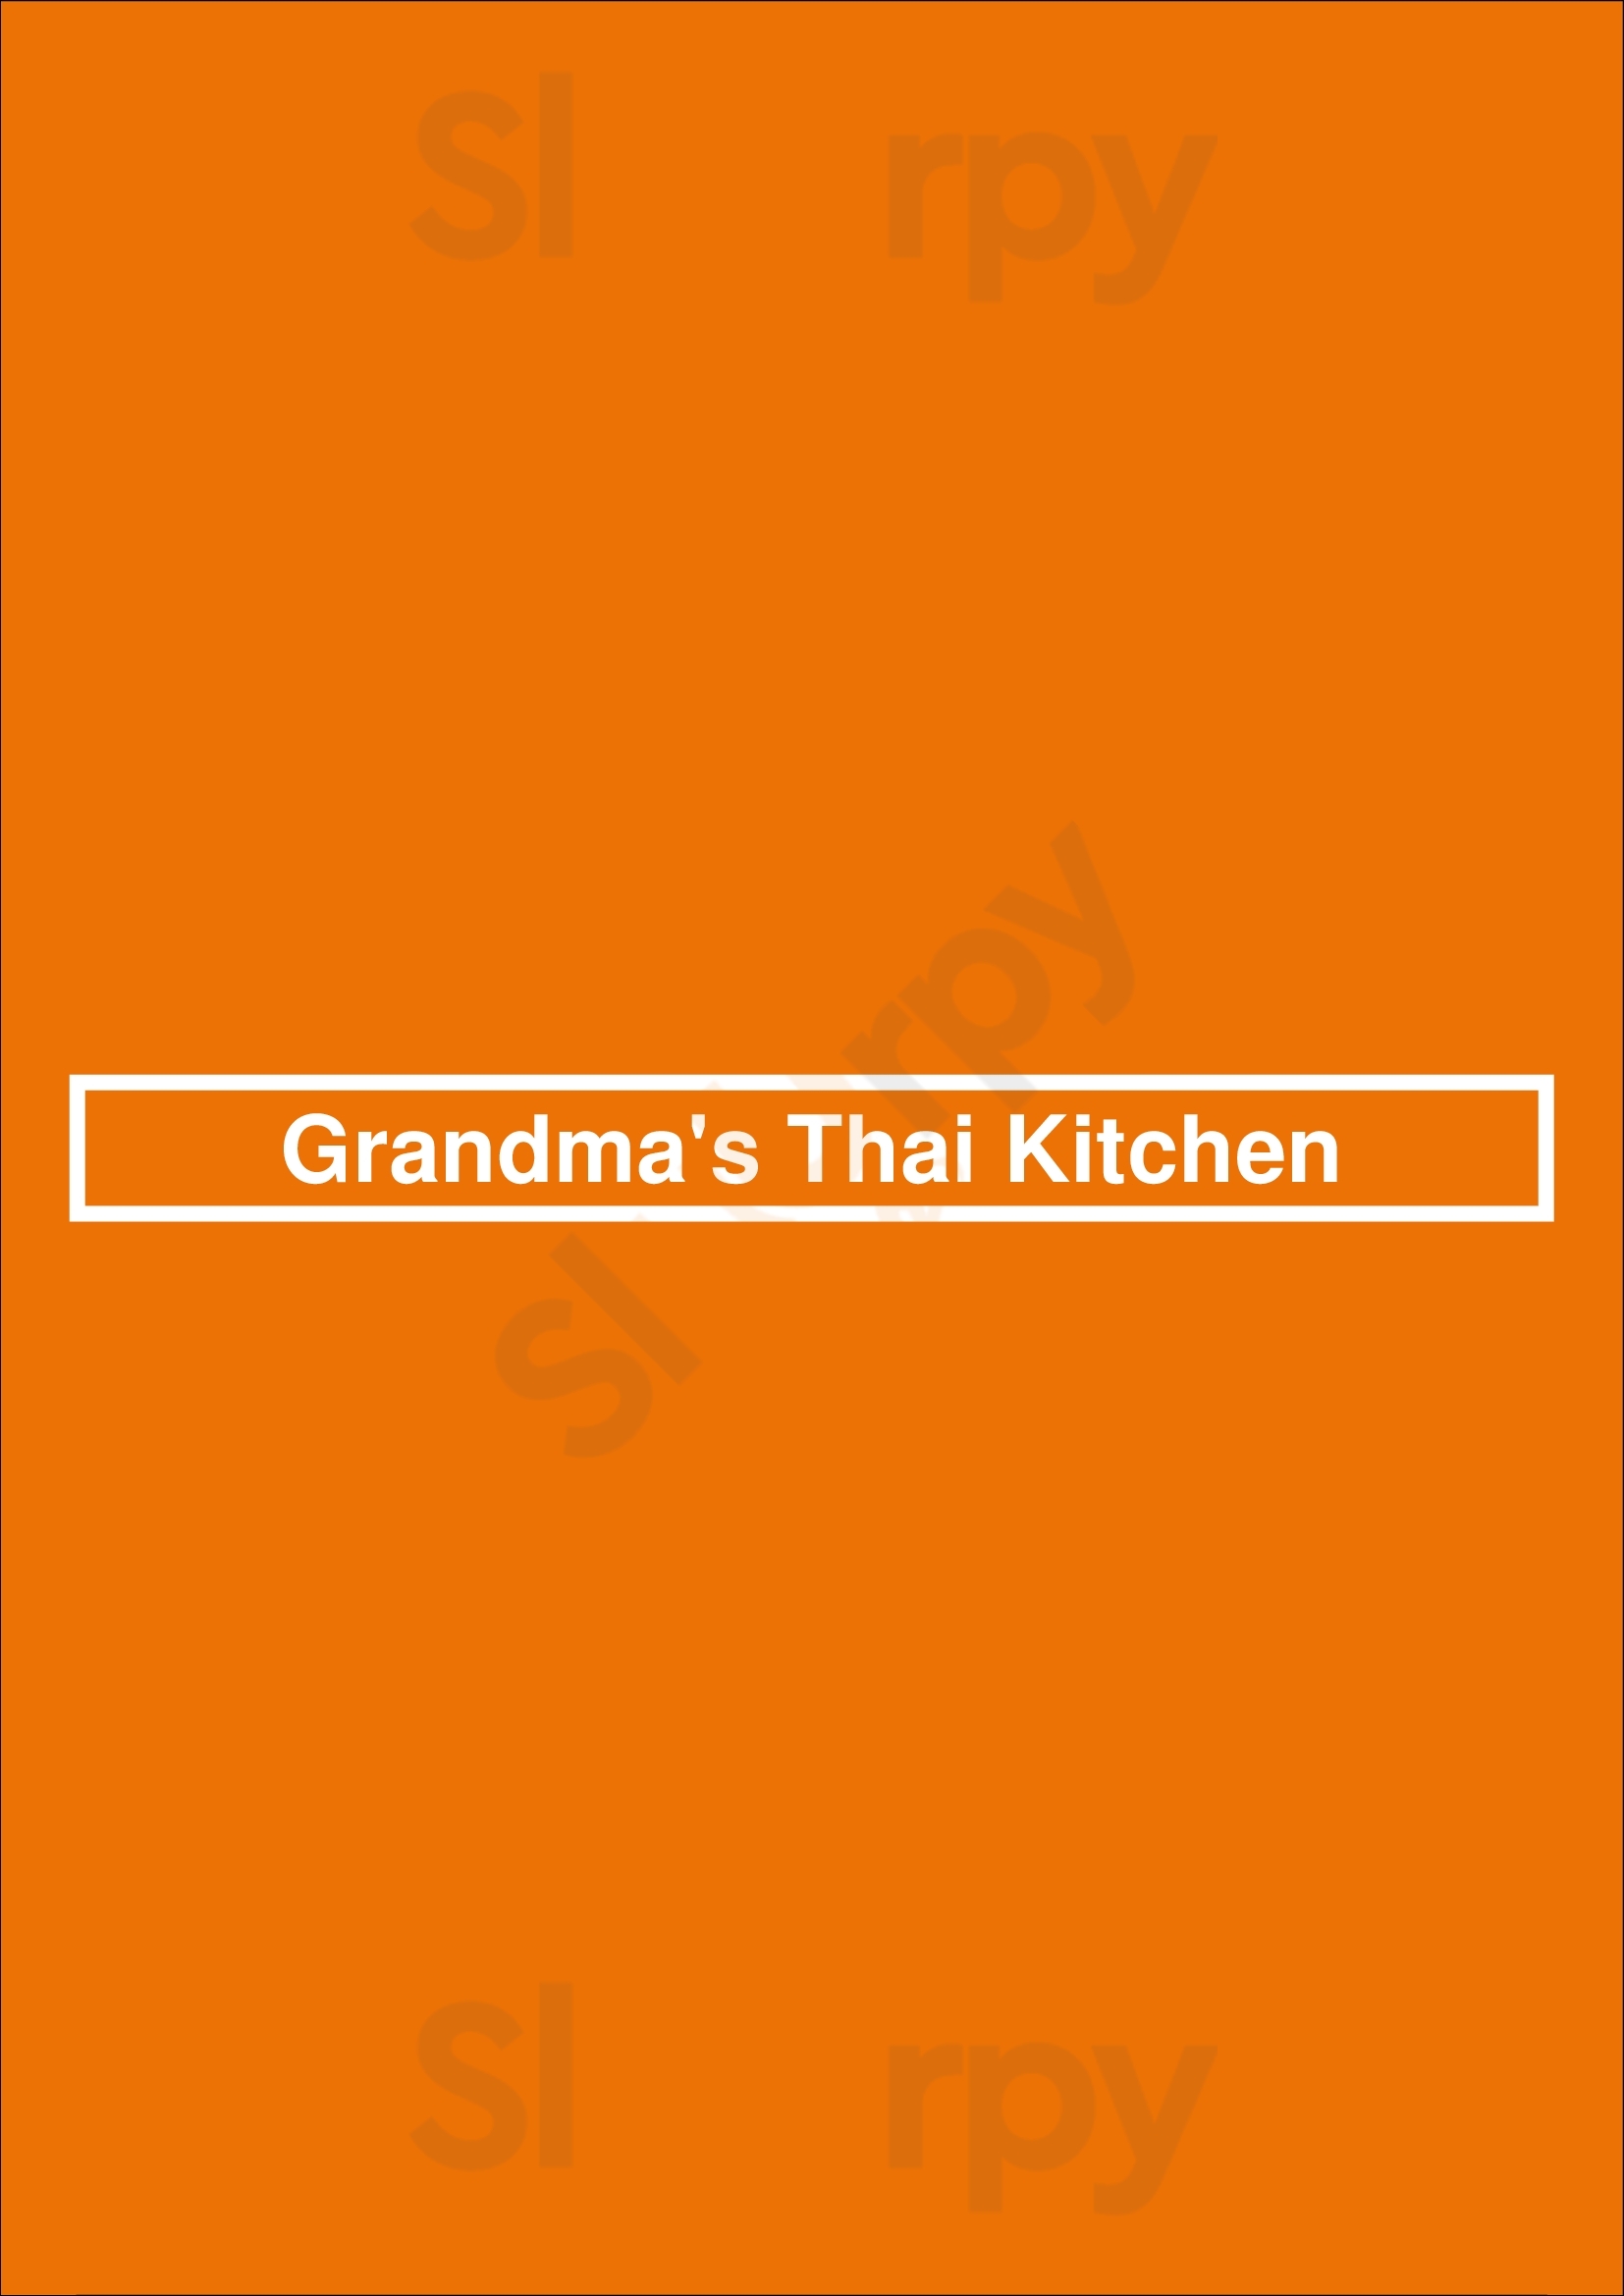 Grandma's Thai Kitchen Los Angeles Menu - 1